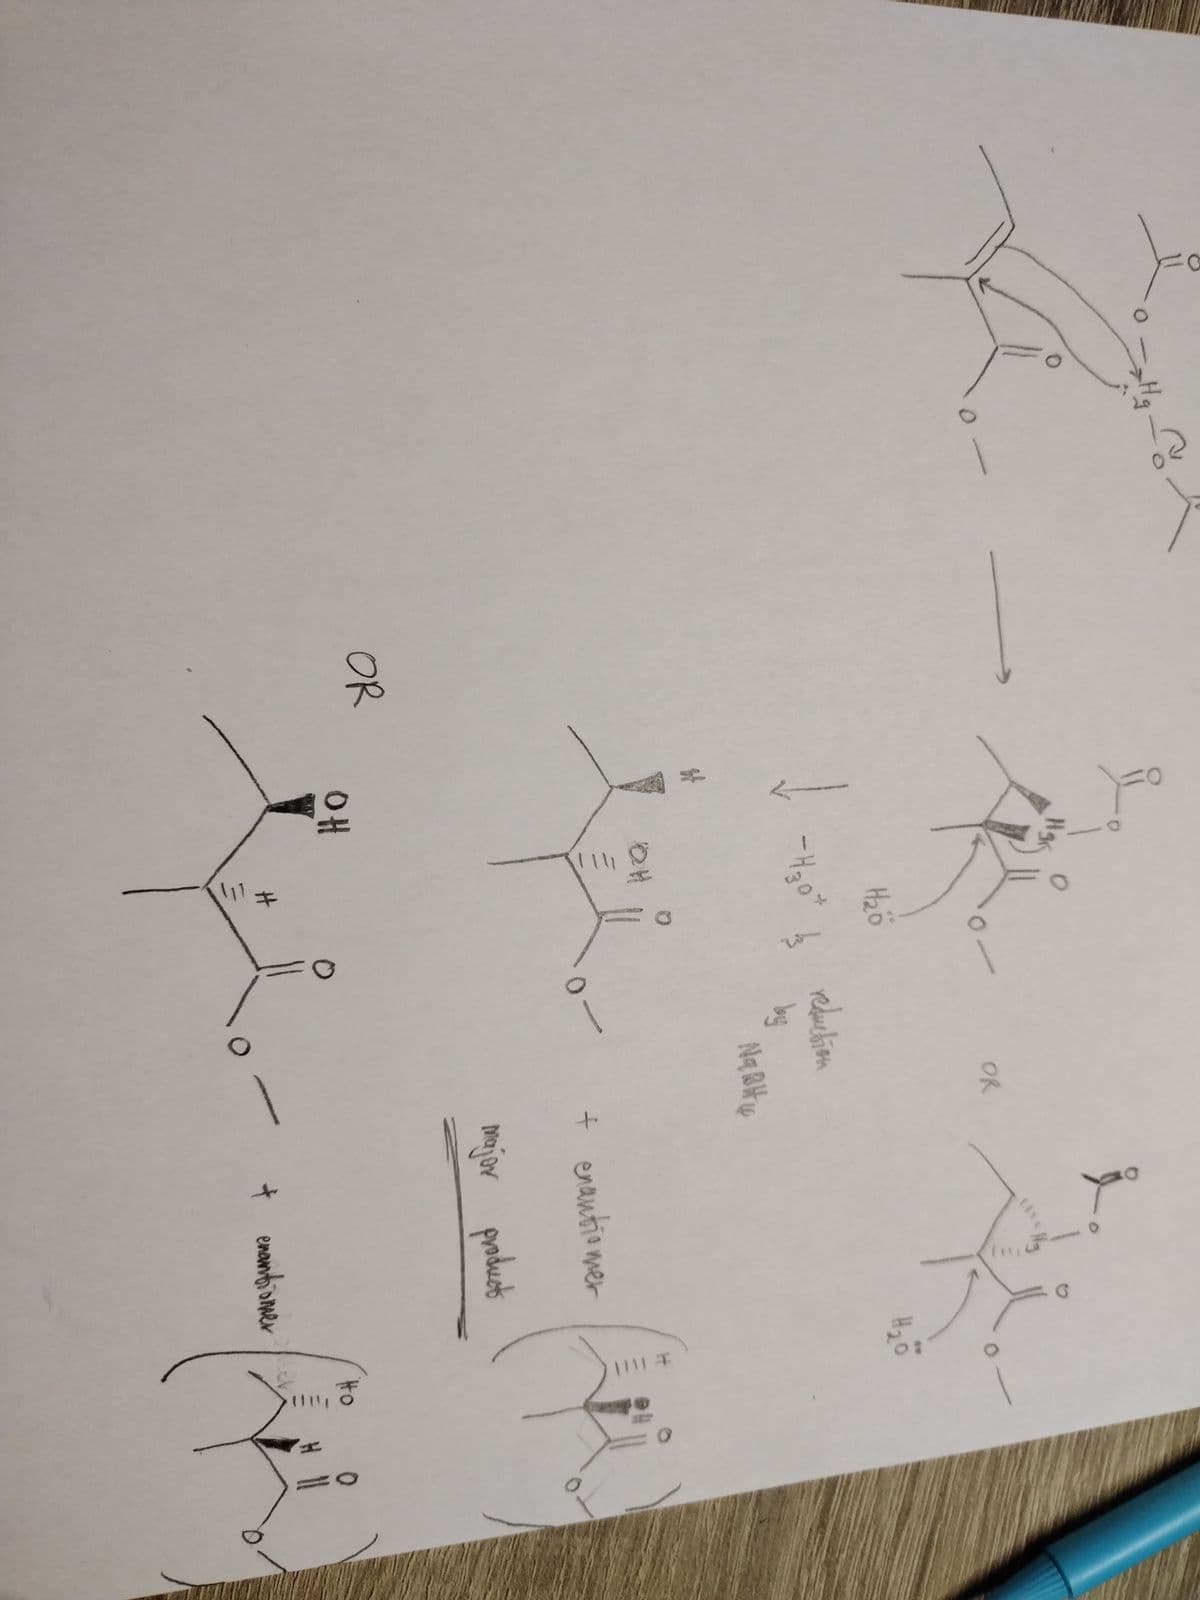 Hg
OR
H₂₂0
-H30* ķ
OH
OH
0
OR
reduction
by
Na BH u
+ enantiomer
major product
tv
H₂0
+ enantiomer
T
Ho
1